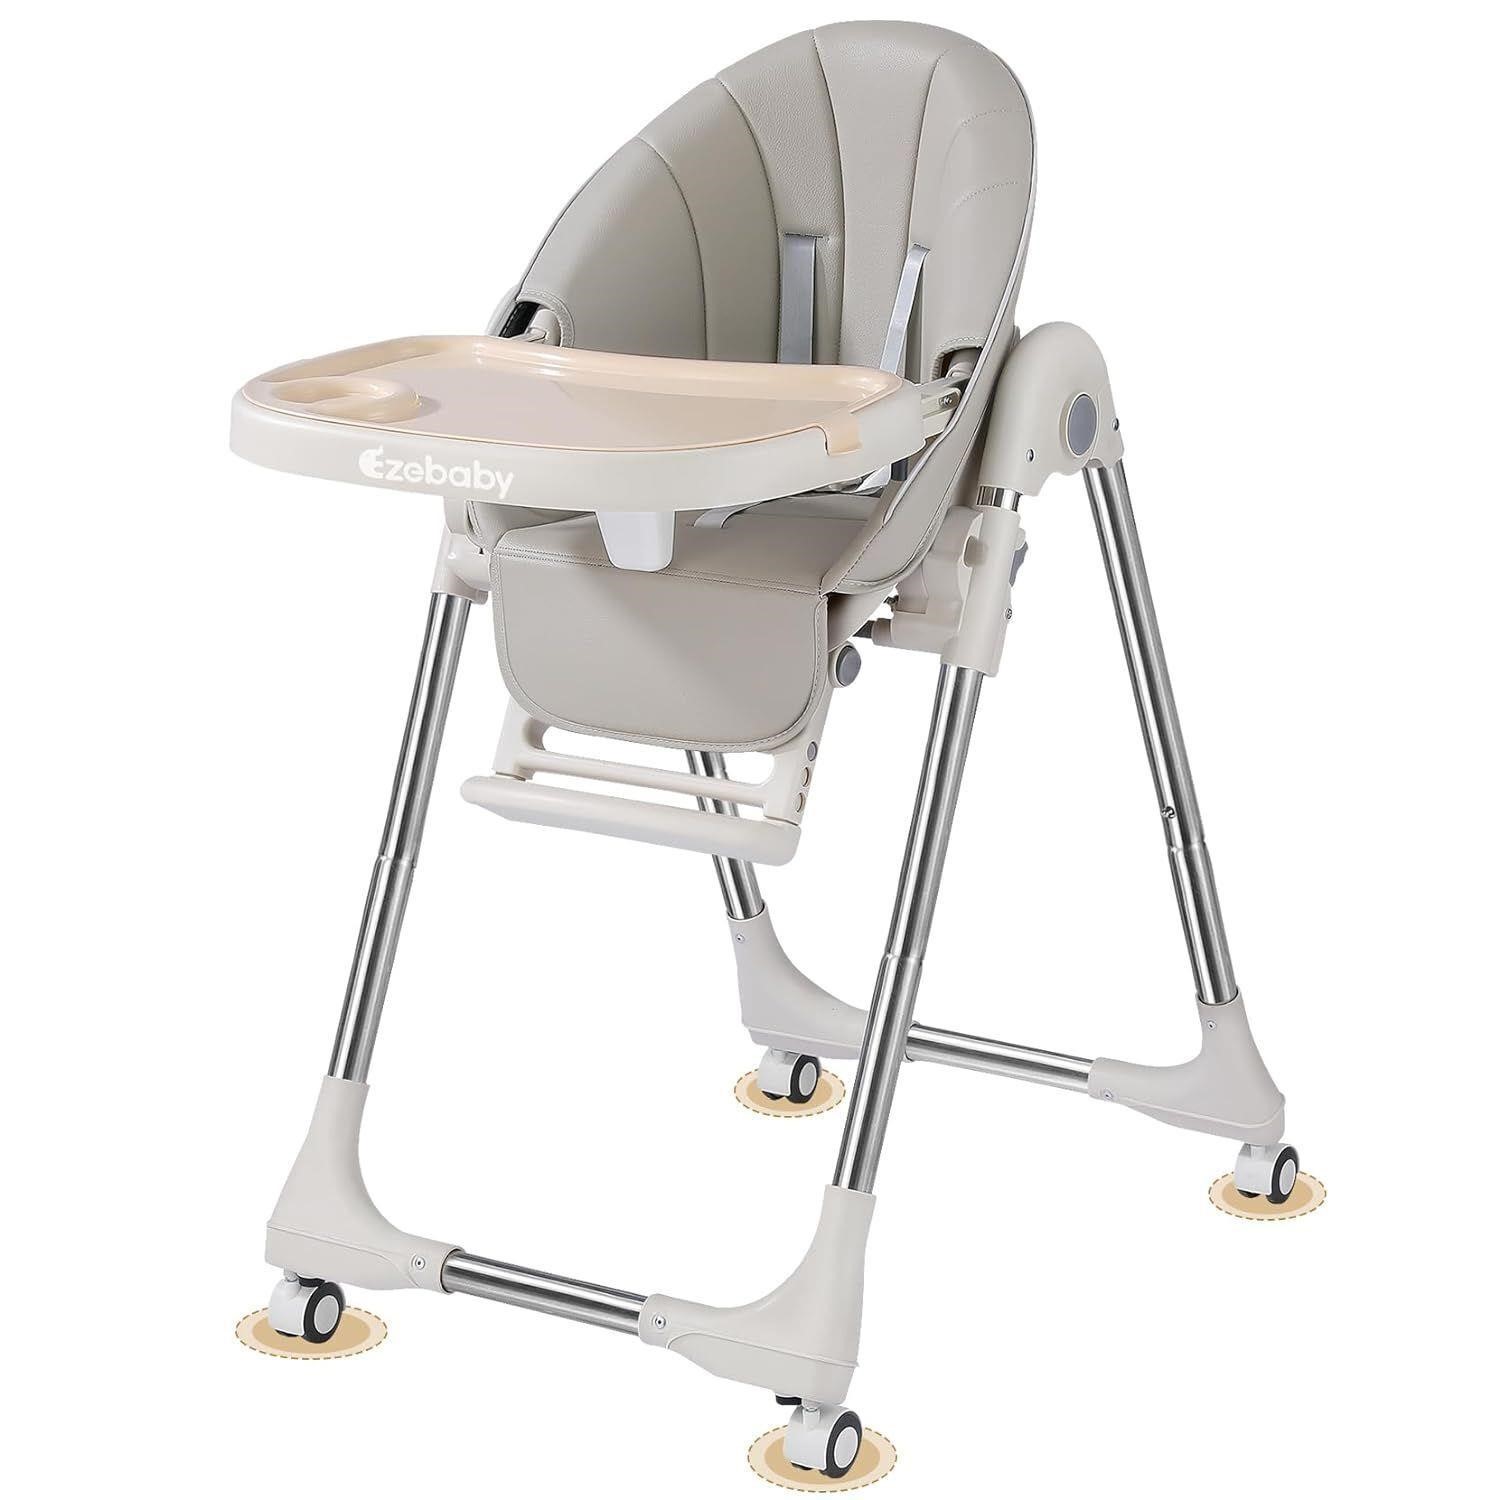 Portable High Chair Adjustable Height,Grey